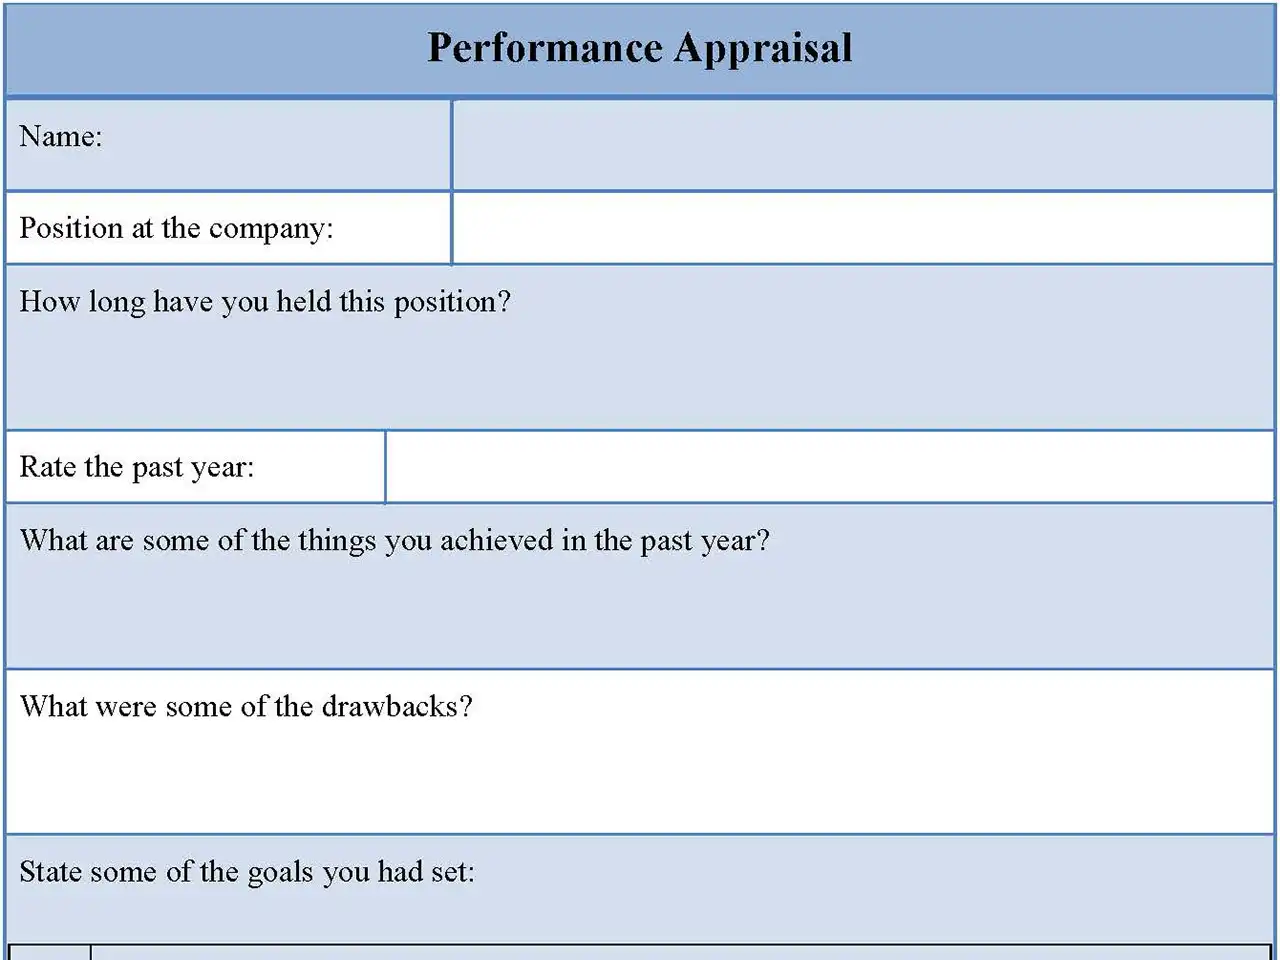 Sample Performance Appraisal Form